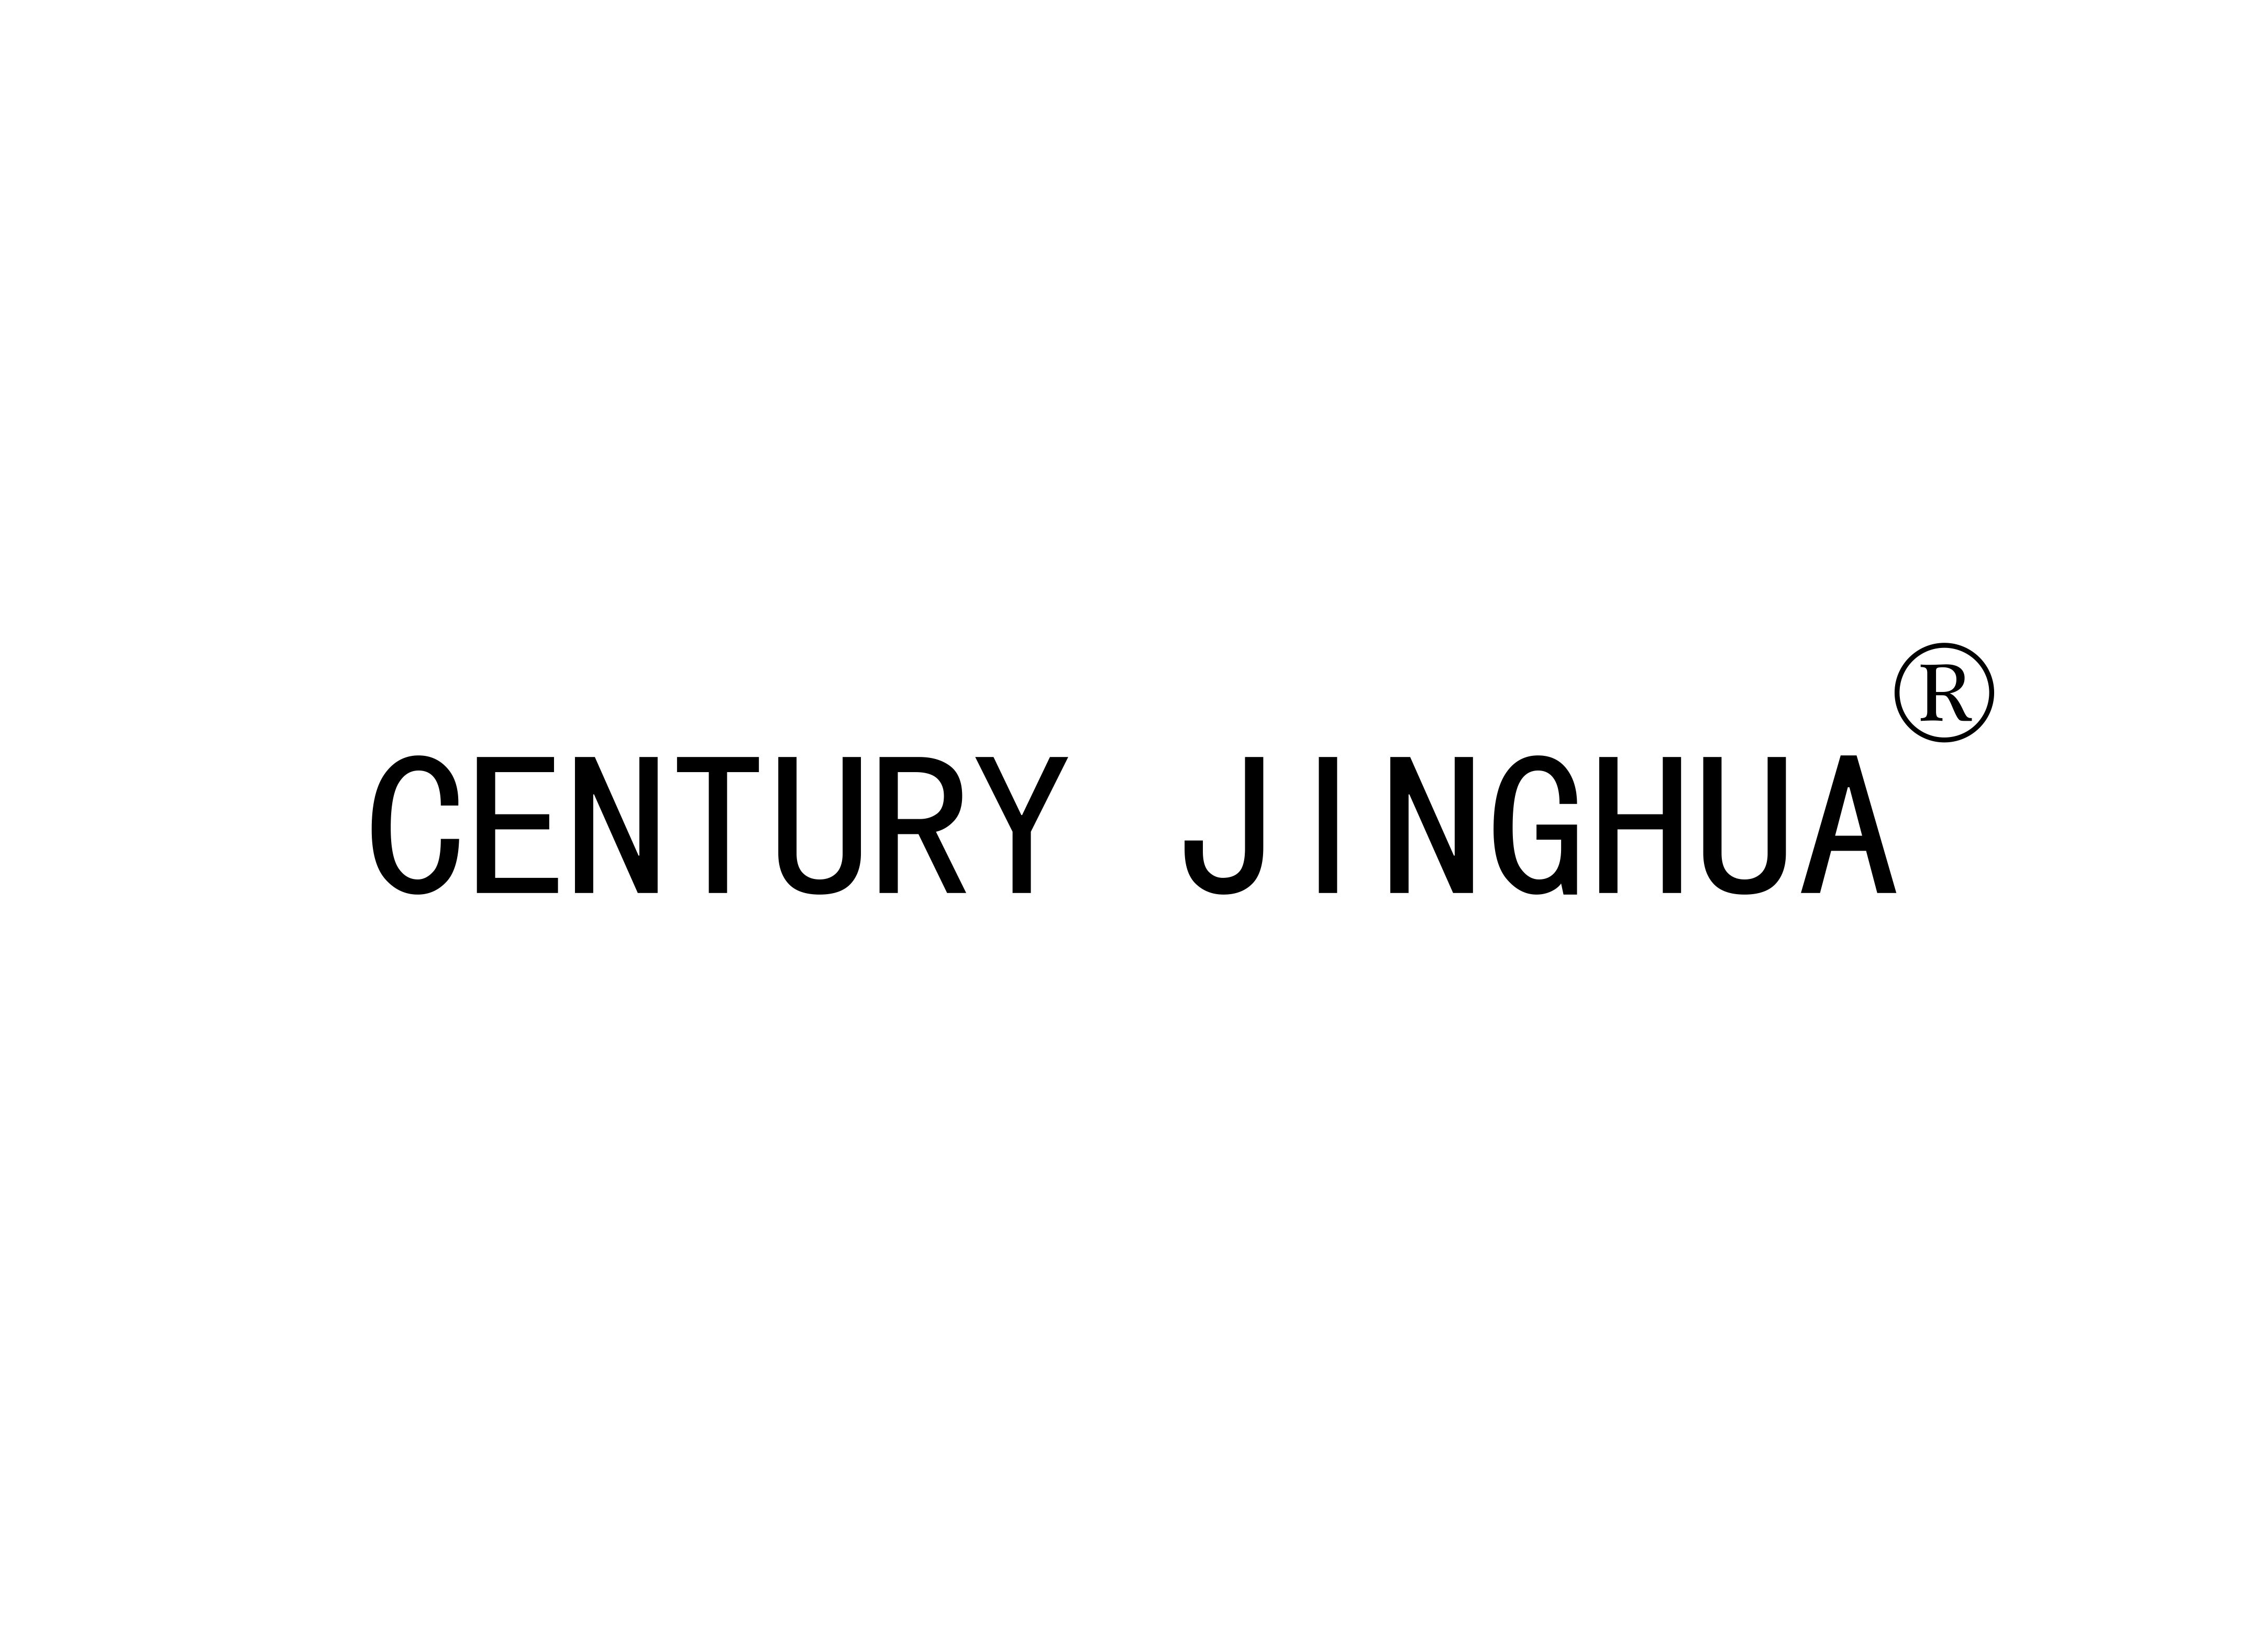 CENTURY JINGHUA